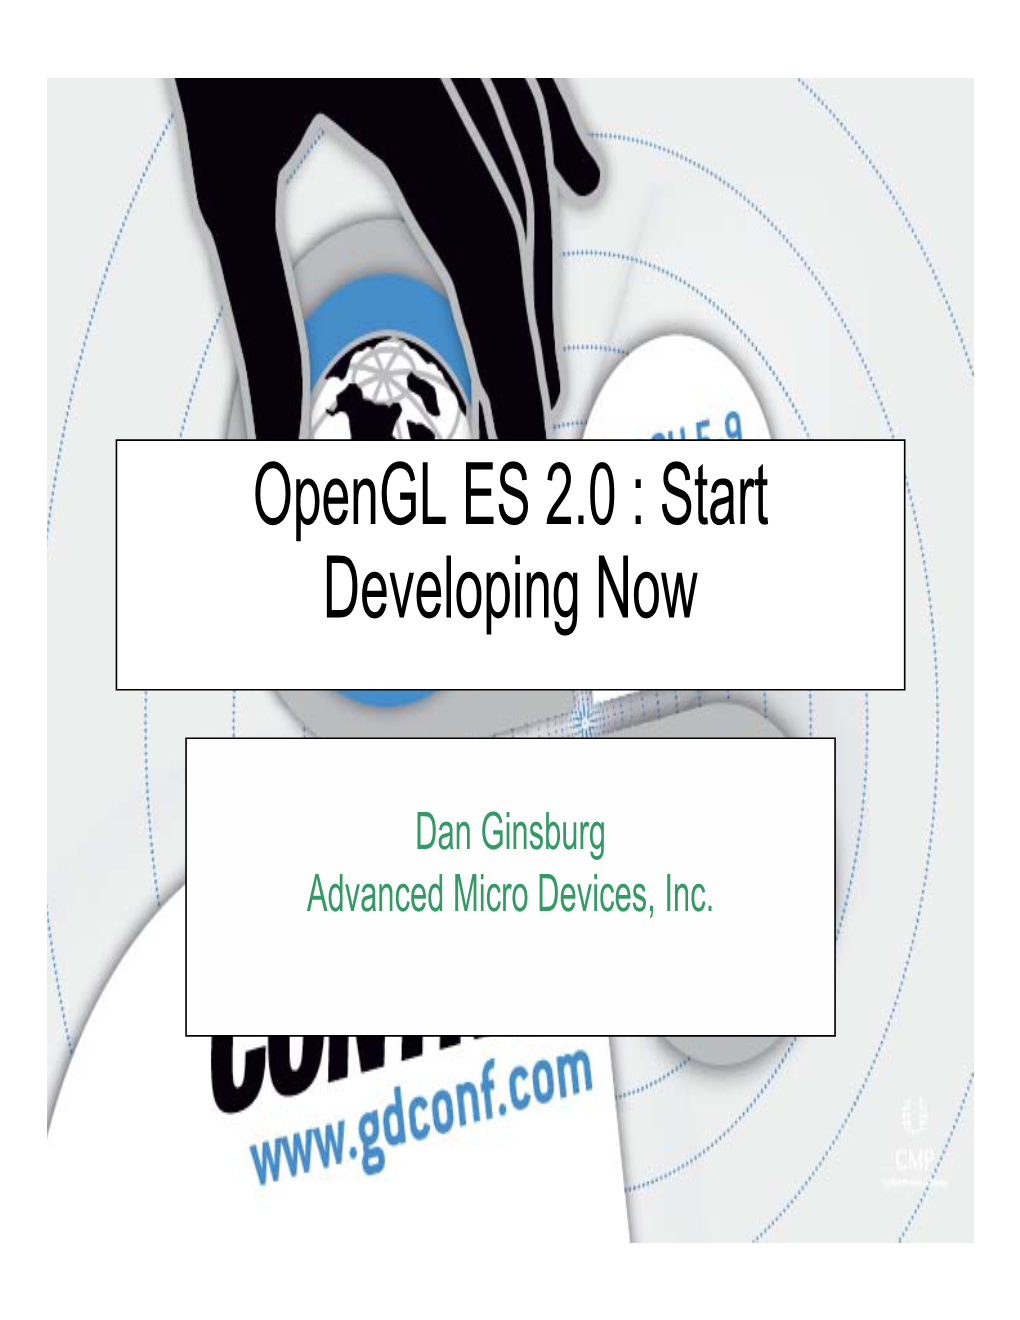 Opengl ES 2.0 : Start Developing Now